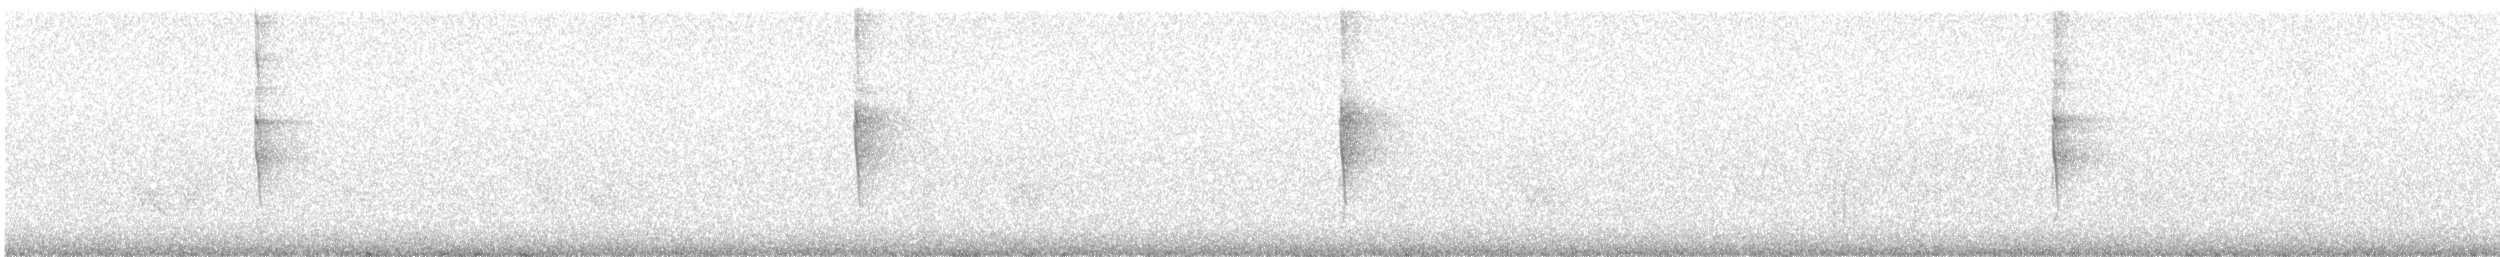 Paruline vermivore - ML583619041